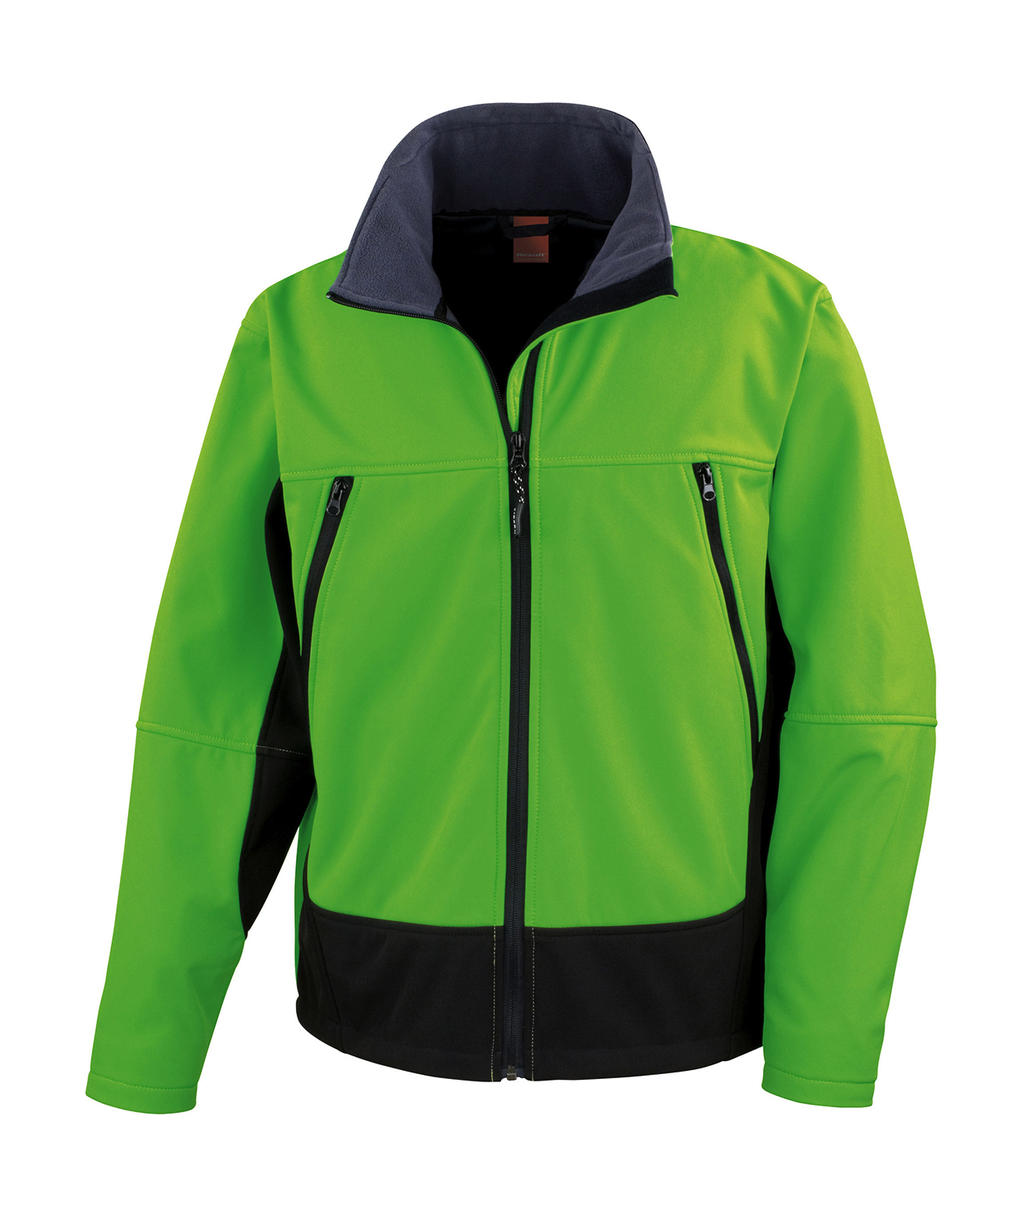  Softshell Activity Jacket in Farbe Vivid Green/Black